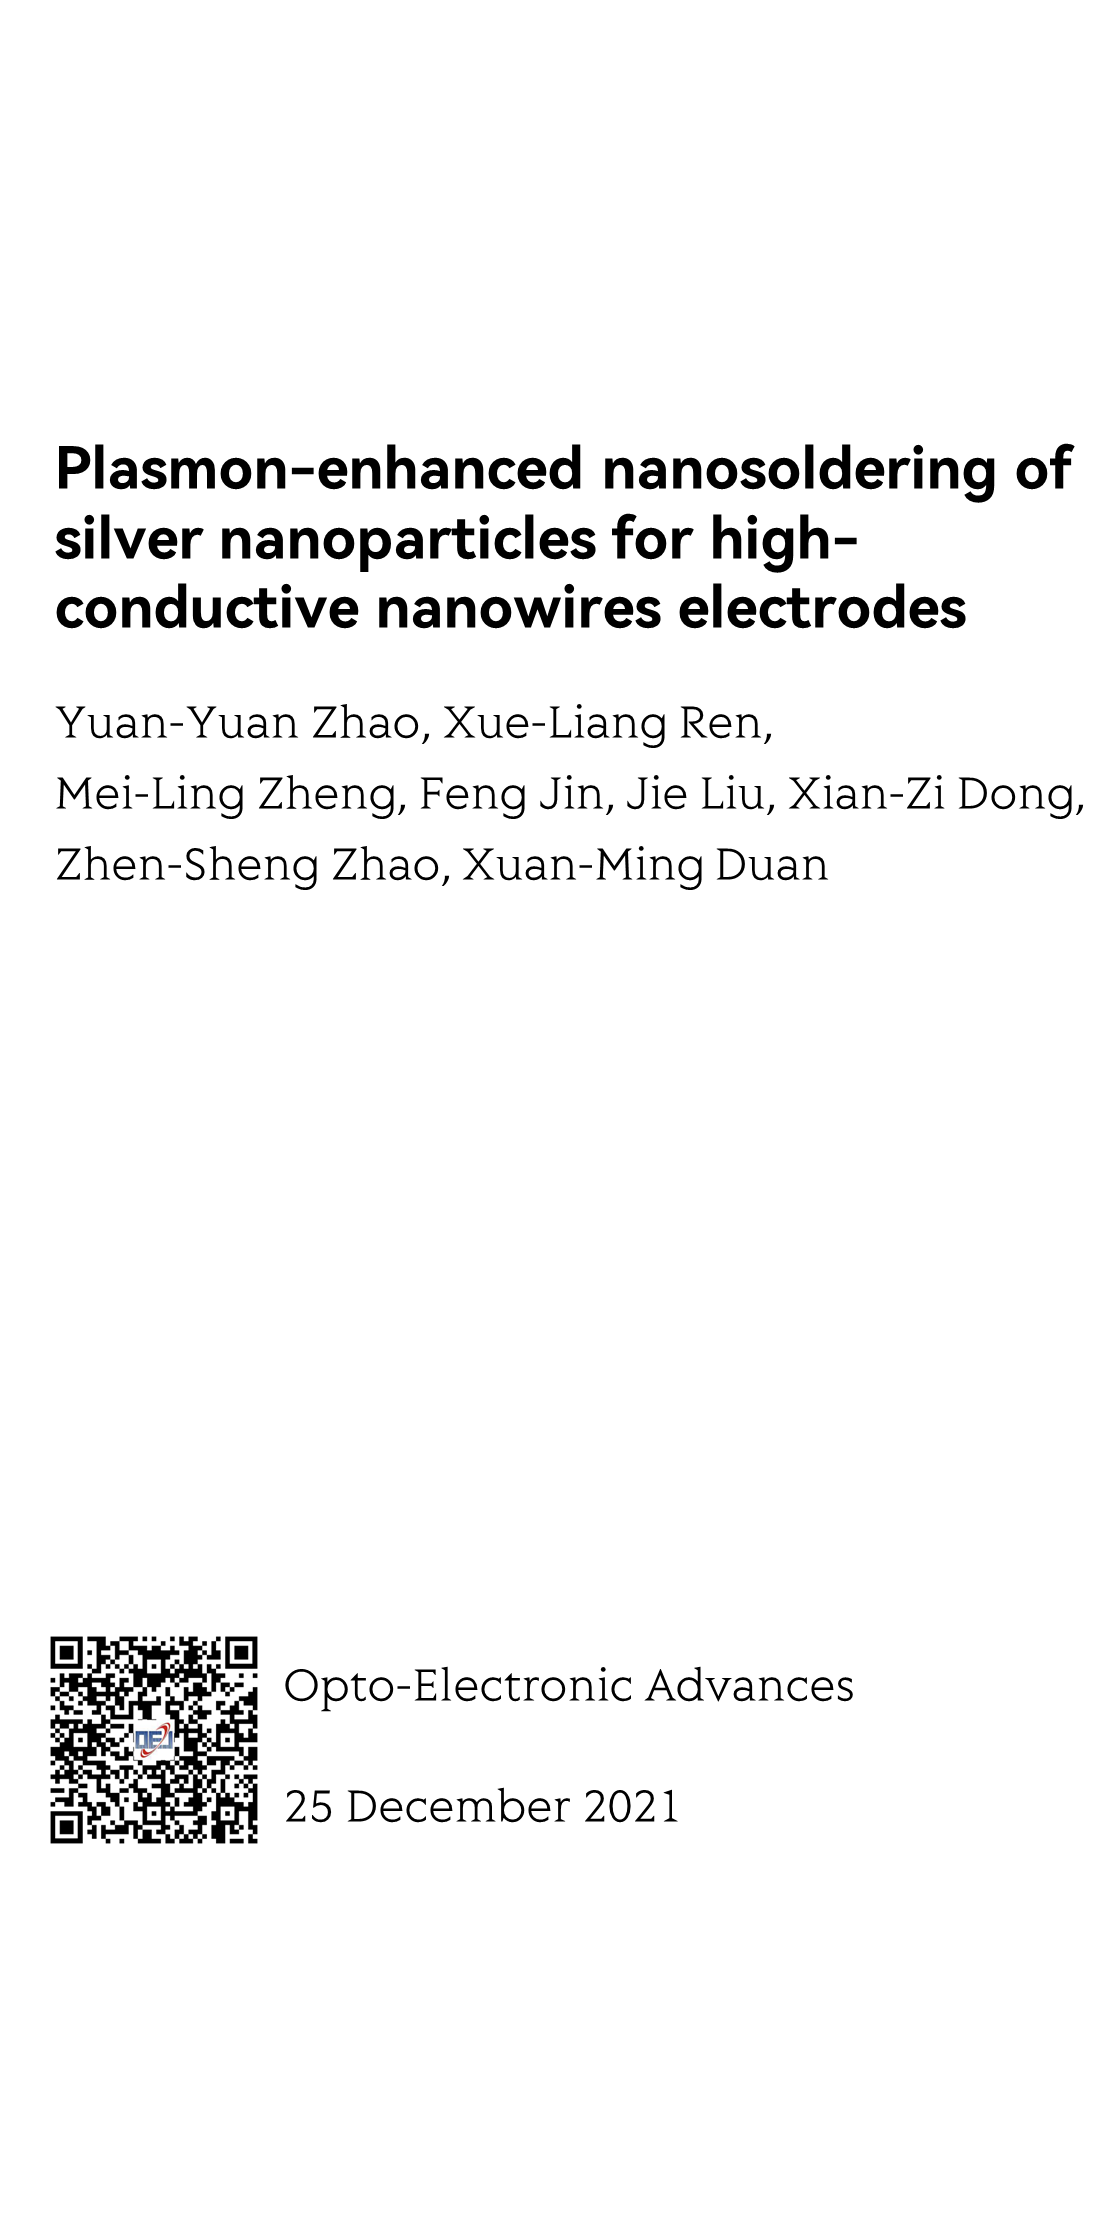 Plasmon-enhanced nanosoldering of silver nanoparticles for high-conductive nanowires electrodes_1